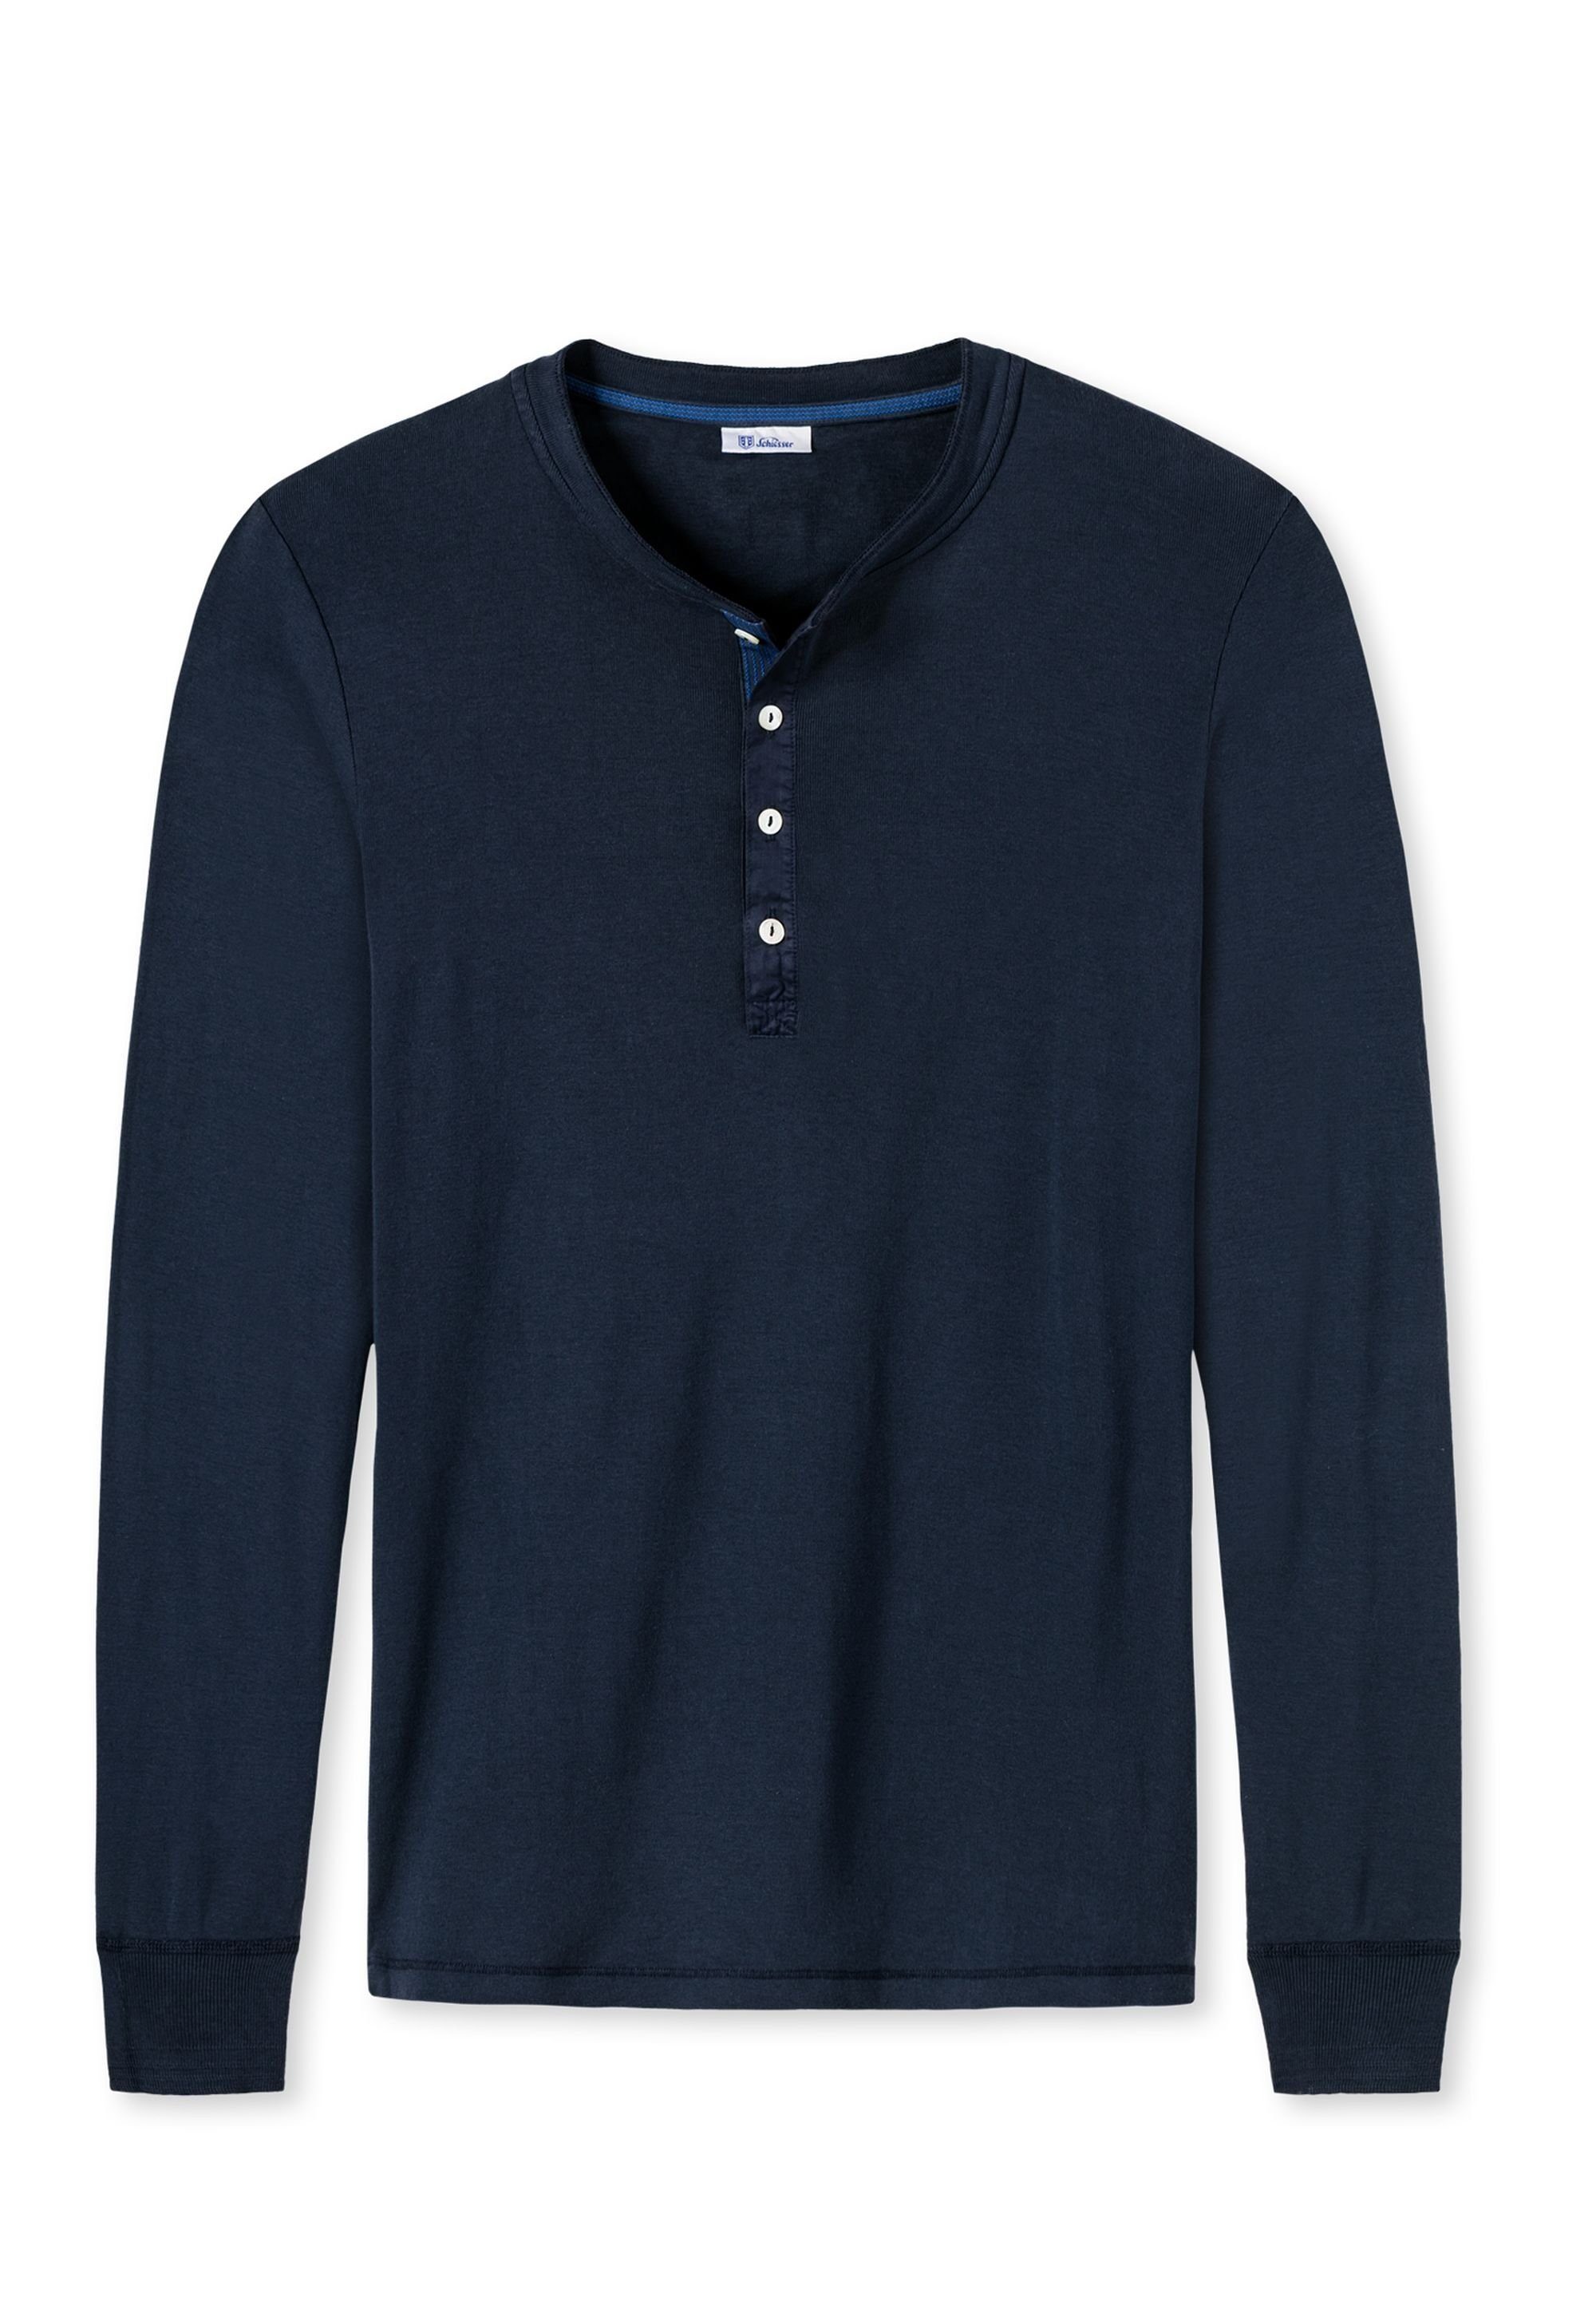 Blau Heinz Herren Shirt SCHIESSER Langarm, Unterhemd, - REVIVAL T-Shirt Karl